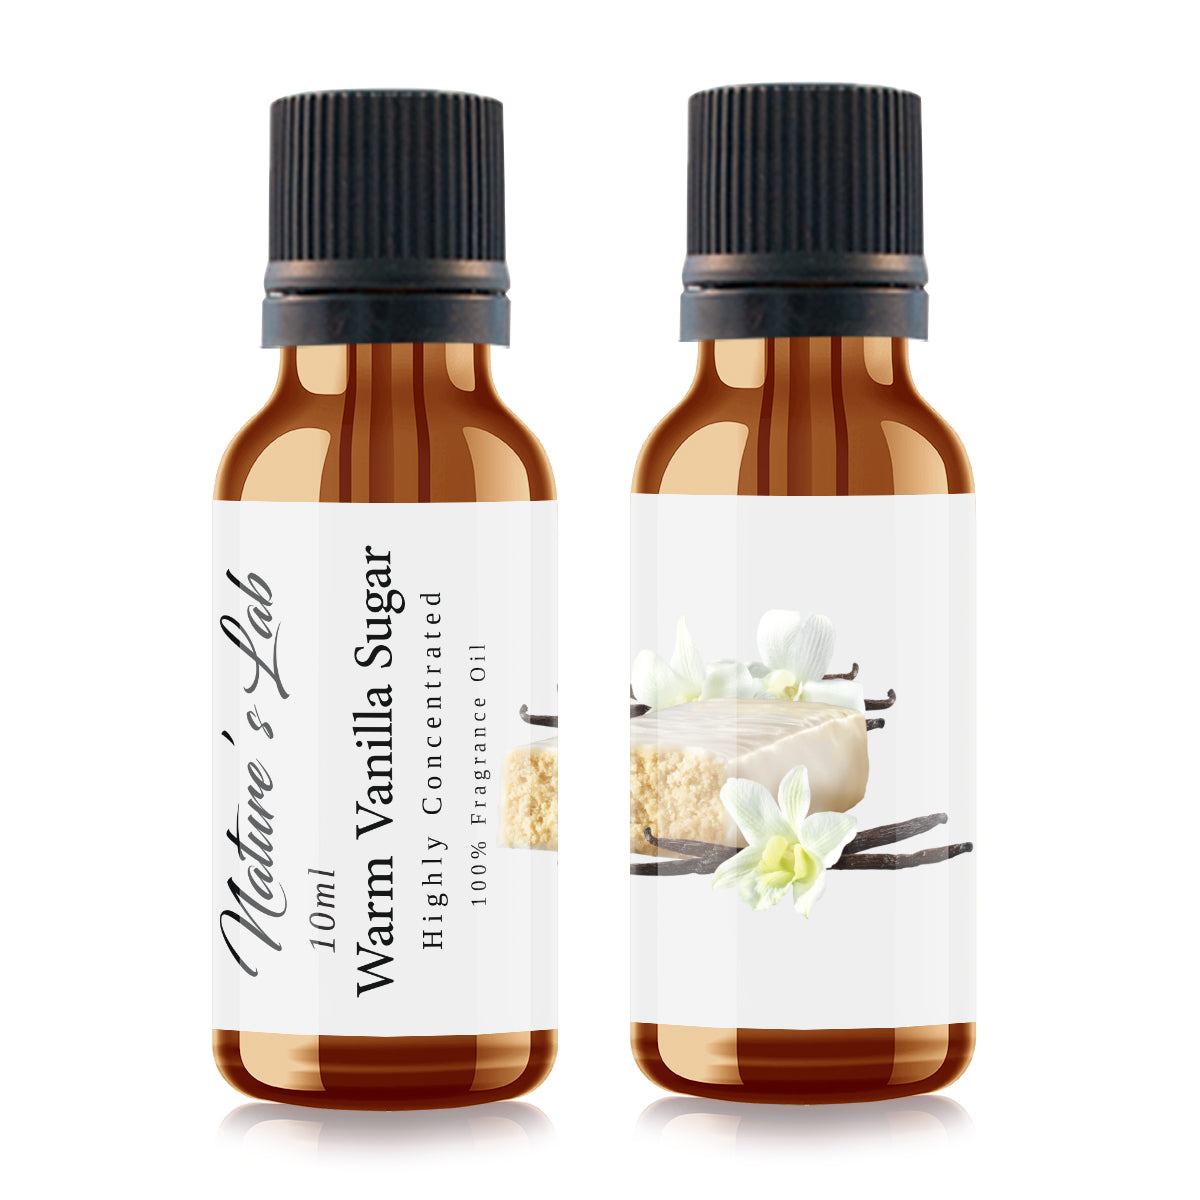 Warm Vanilla Sugar Massage Oil, 16 oz